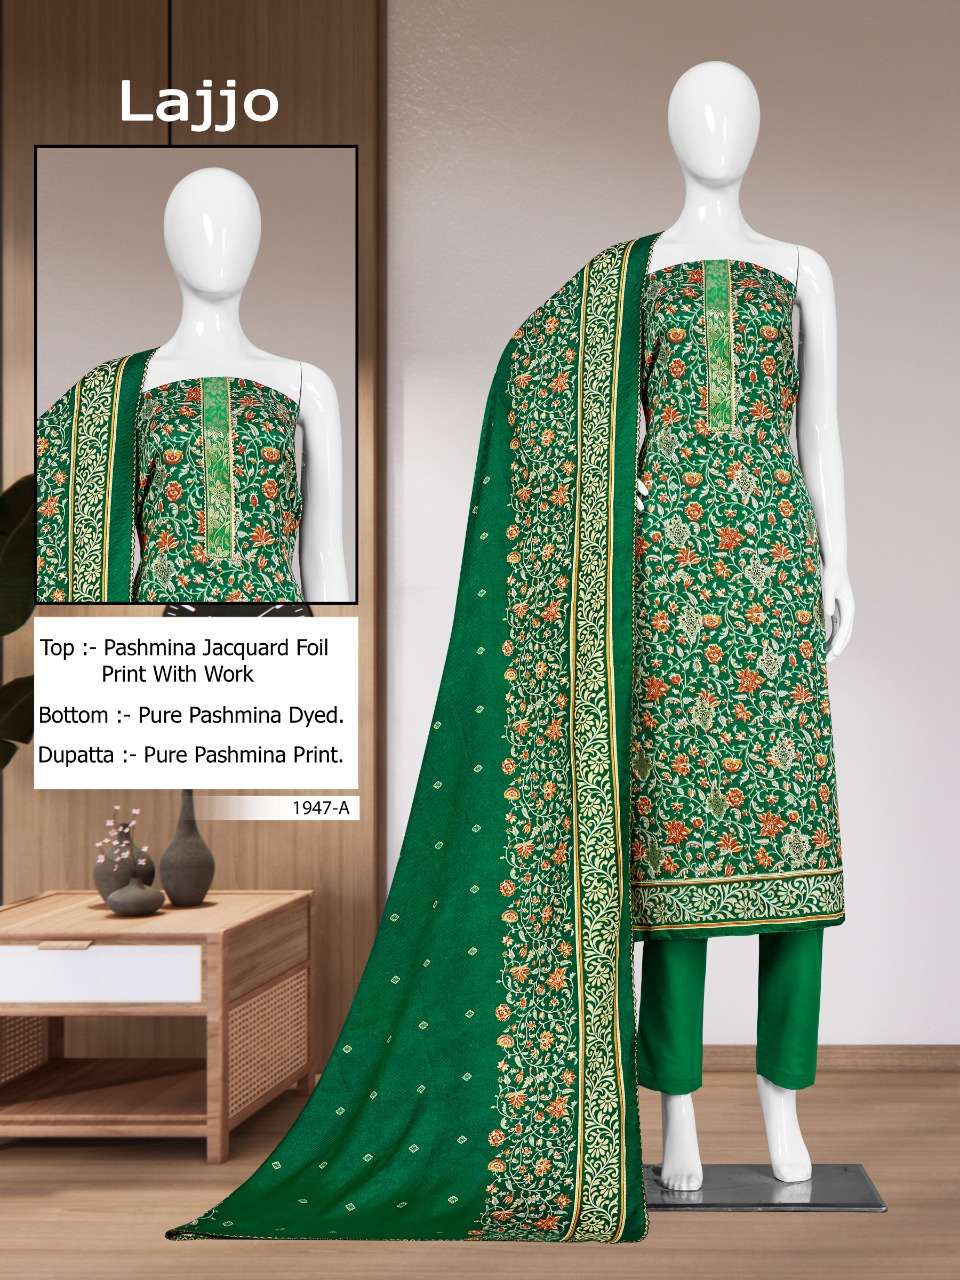 Lajjo BY Bipson Wholesale Online Salwar Suit SET